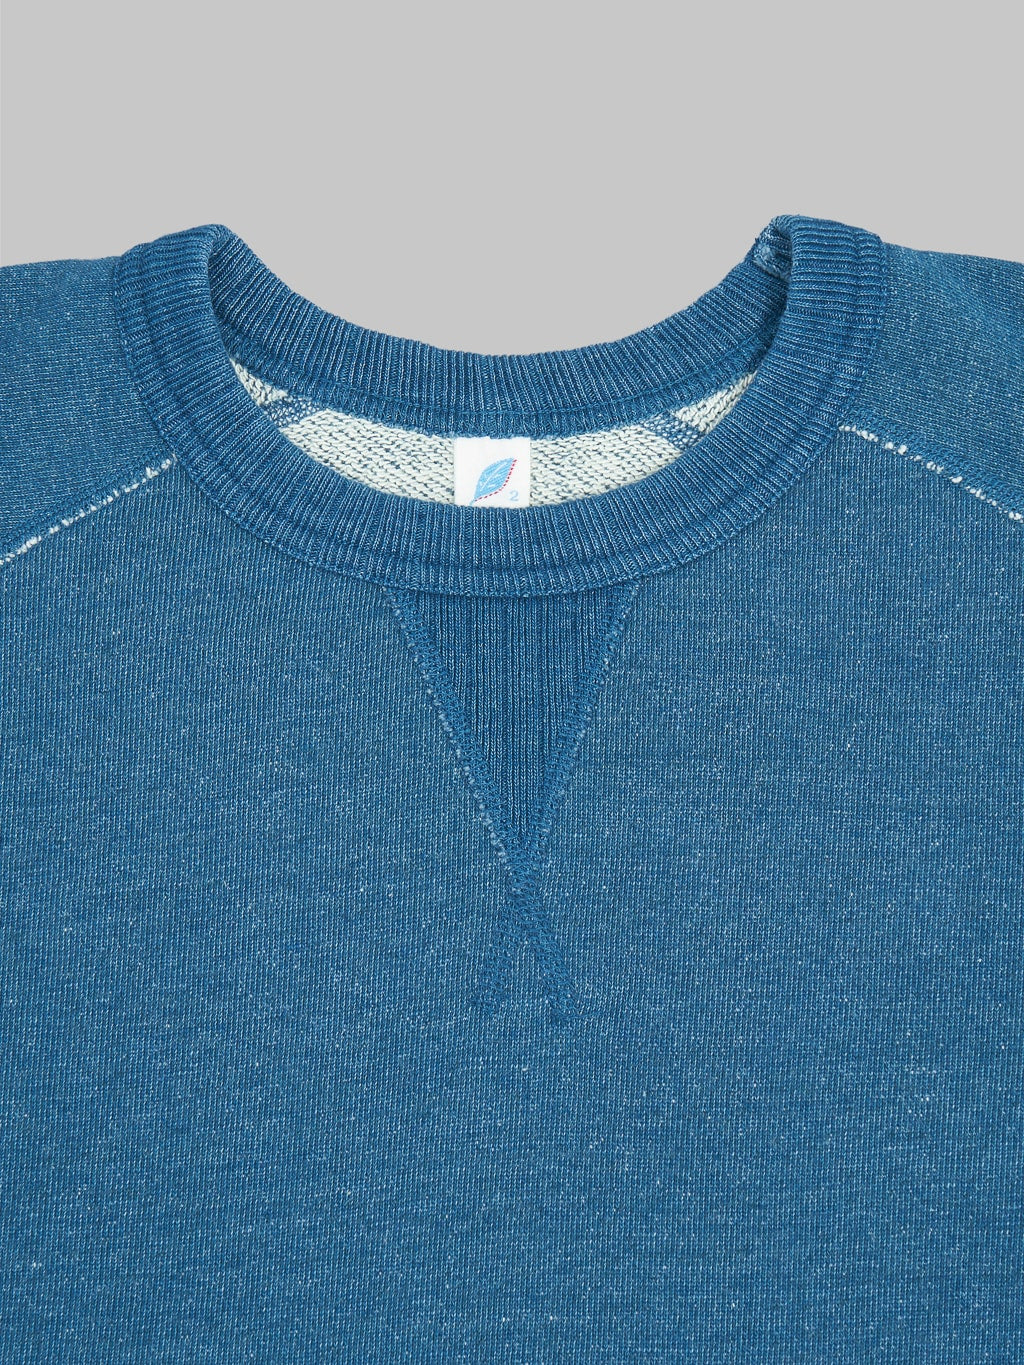 Pure Blue Japan Slub Yarn Sweatshirt Greencast Indigo crewneck